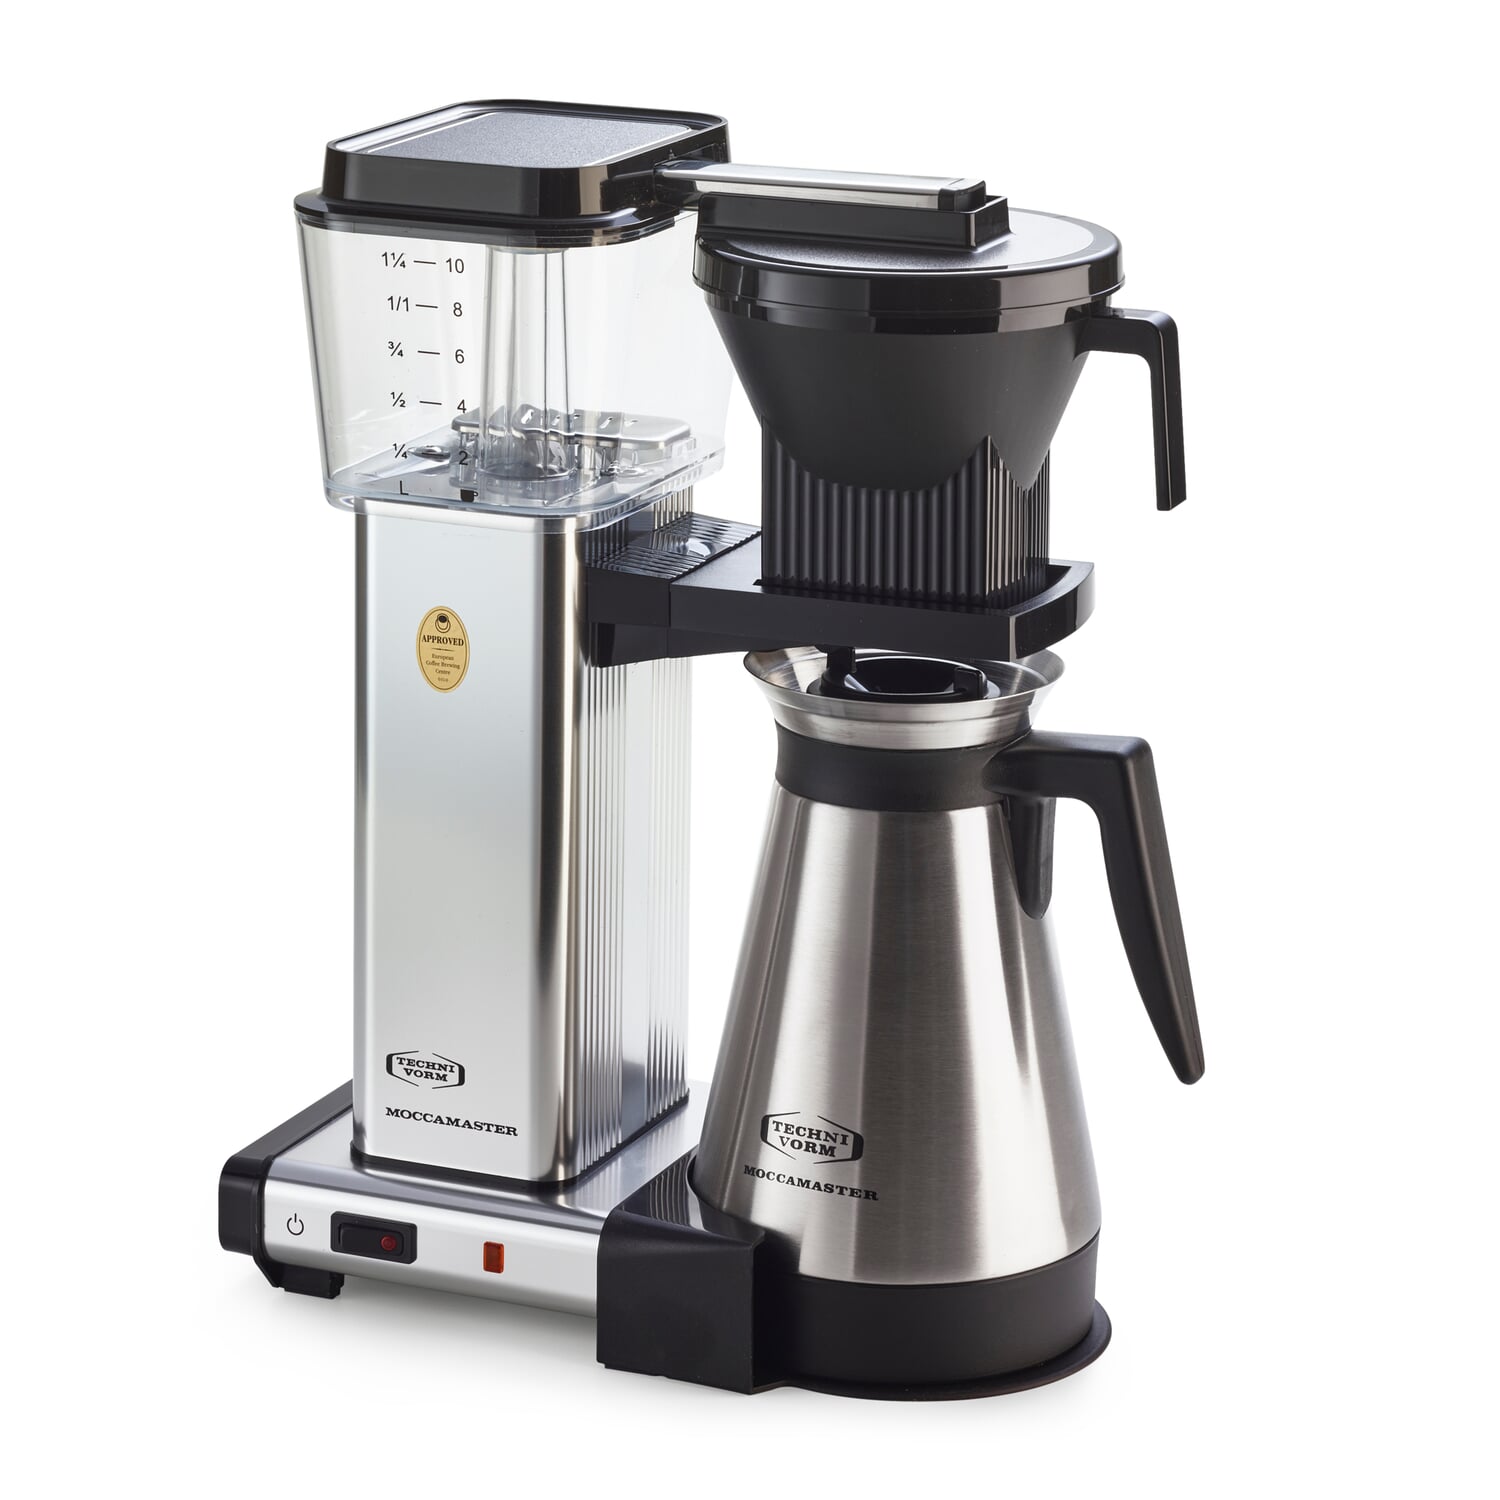 https://assets.manufactum.de/p/202/202576/202576_01.jpg/moccamaster-filter-coffee-maker-kbg-741-thermo.jpg?profile=pdsmain_1500